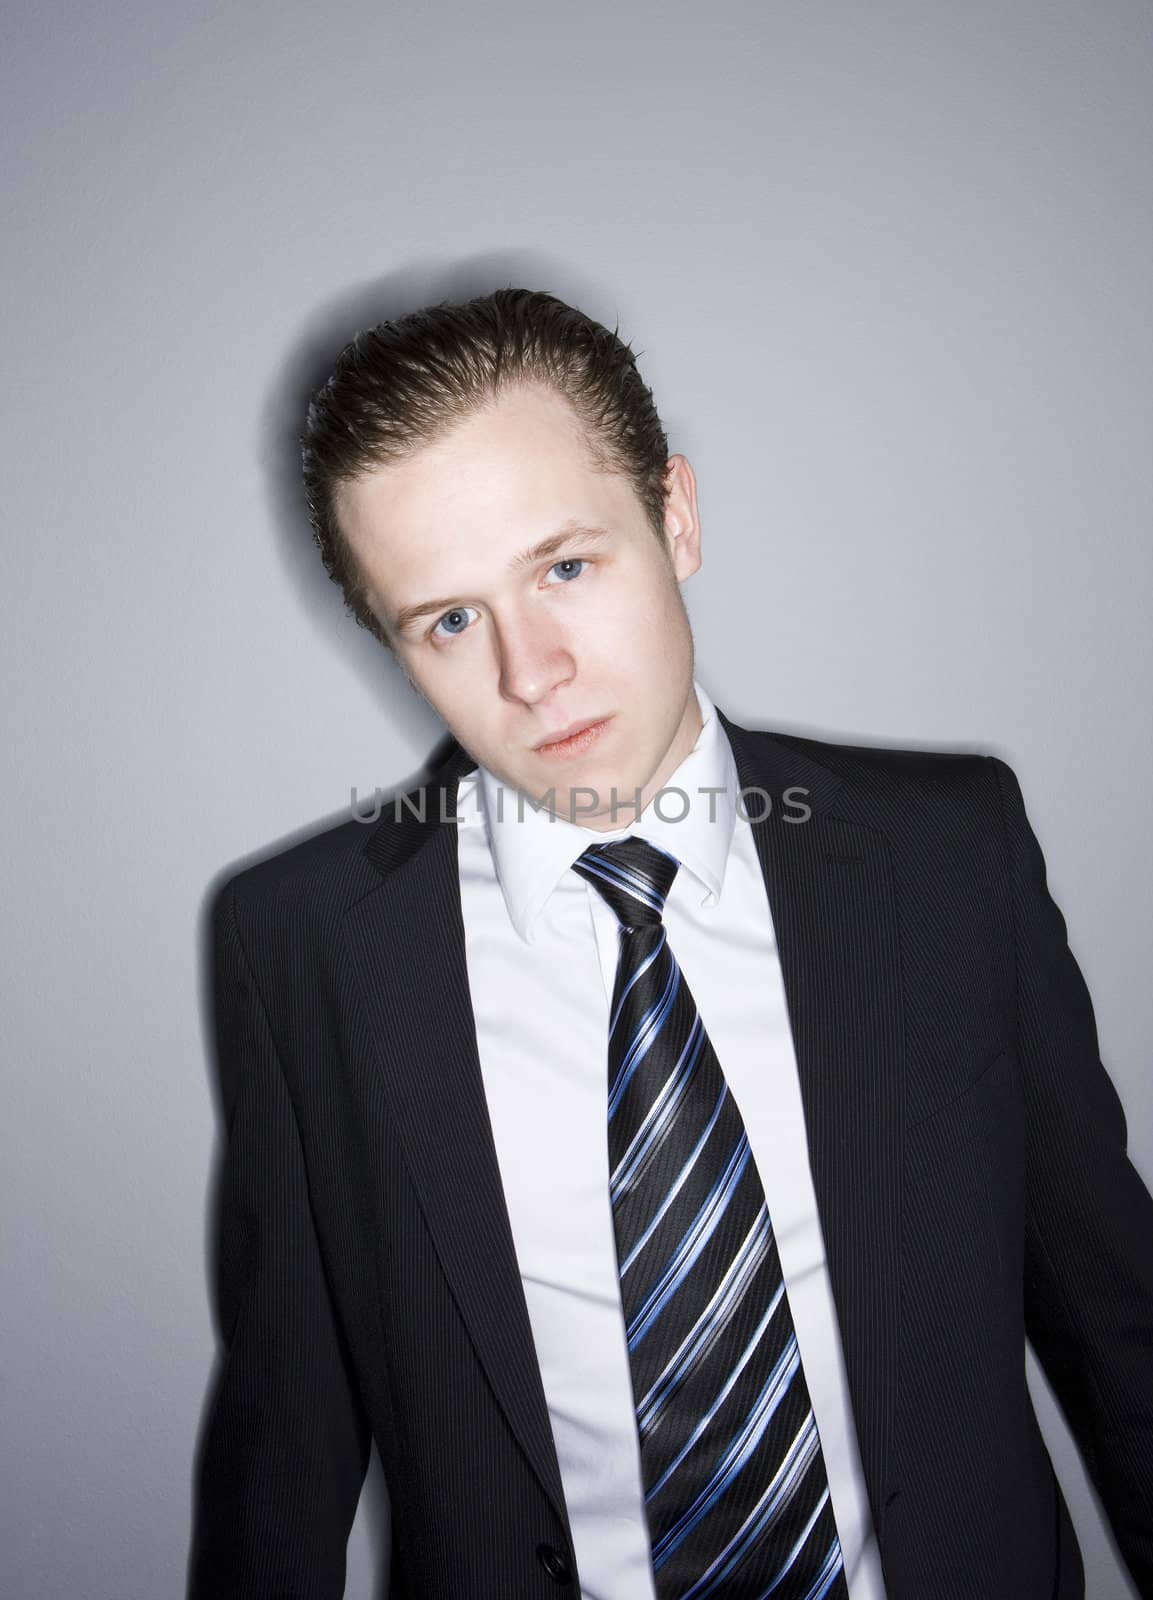 Portrait of a young man by gemenacom